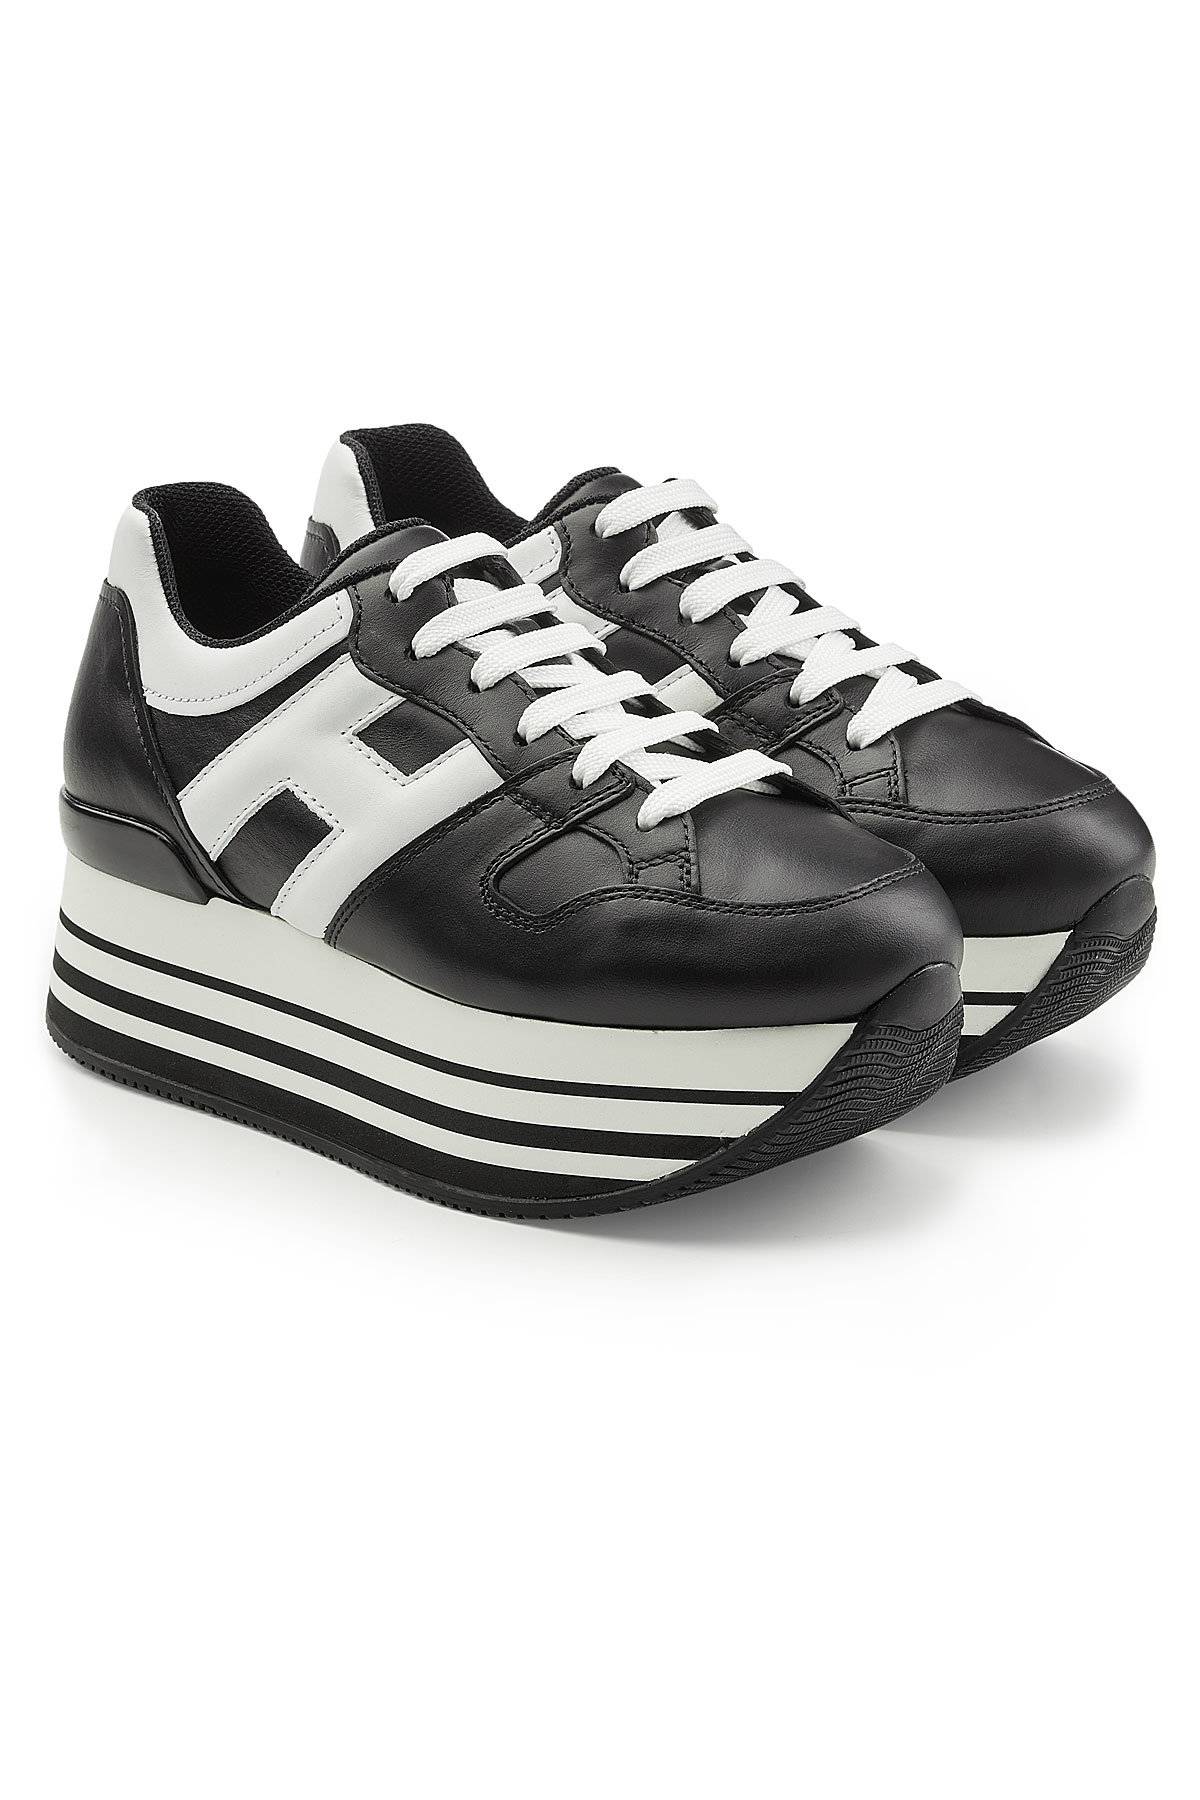 Hogan - Maxi H222 Leather Platform Sneakers